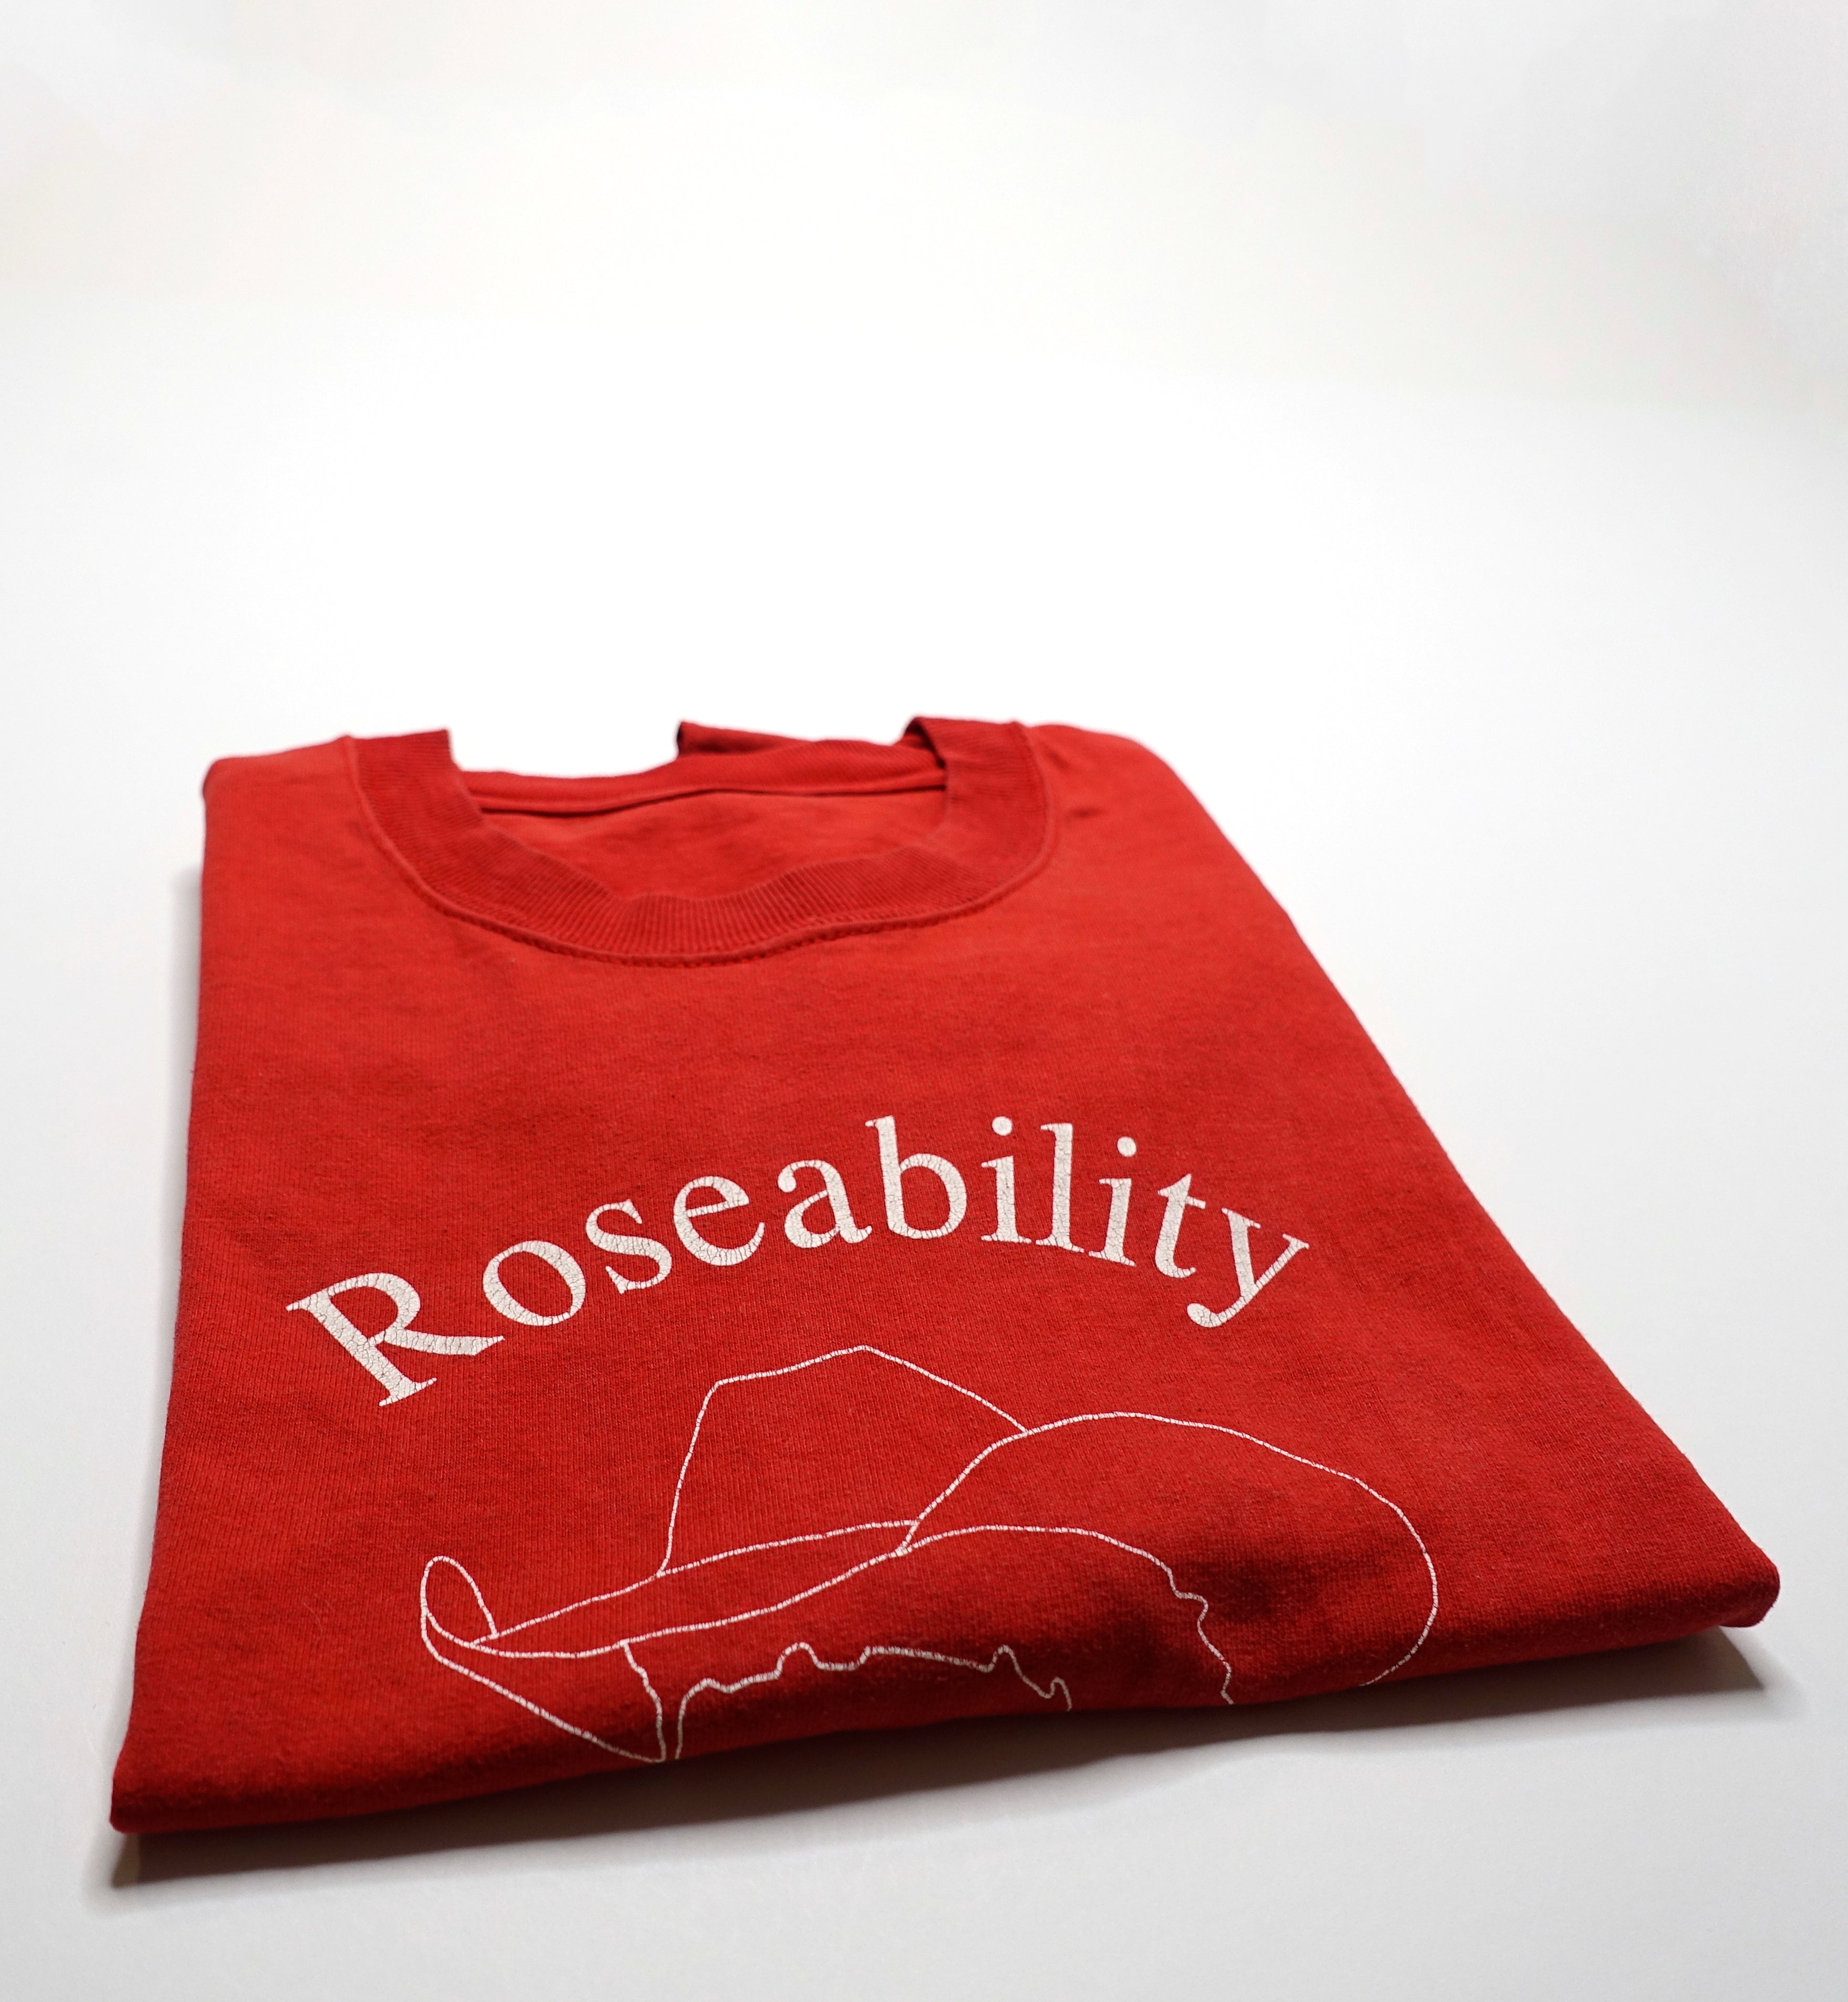 Idlewild - Roseability / 100 Broken Windows 2000 Tour Shirt Size Large